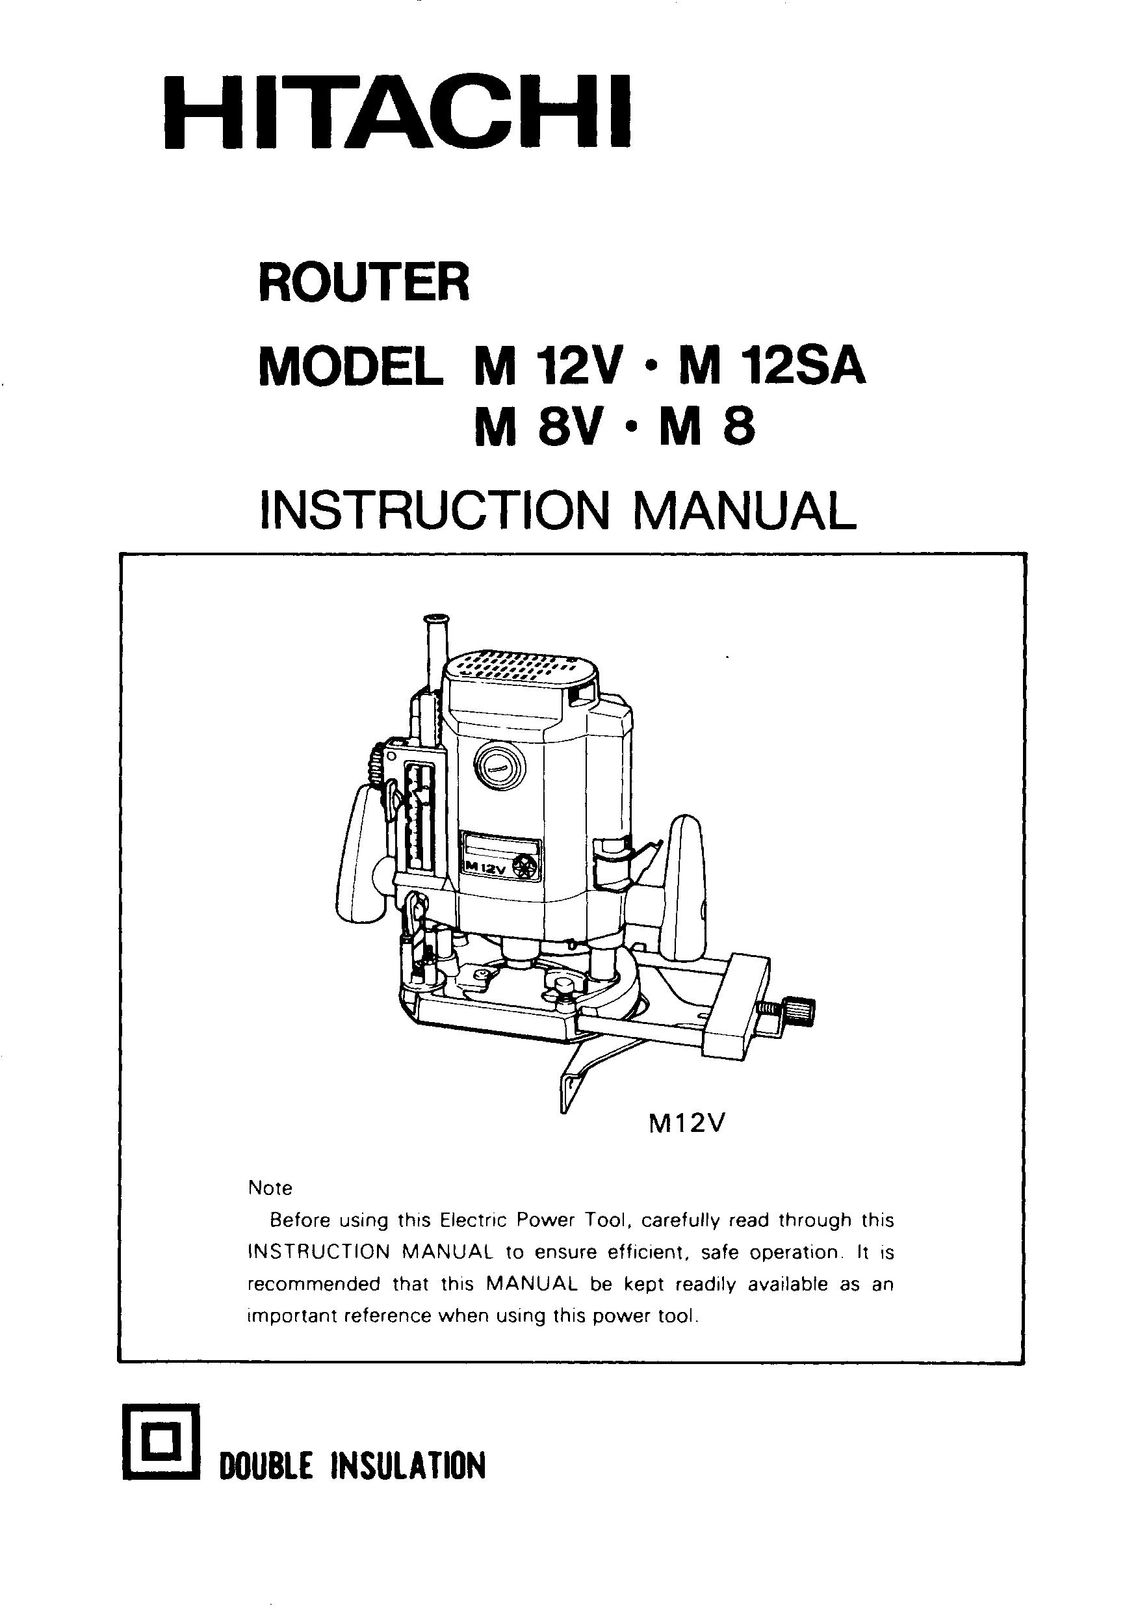 Hitachi M8V Router User Manual